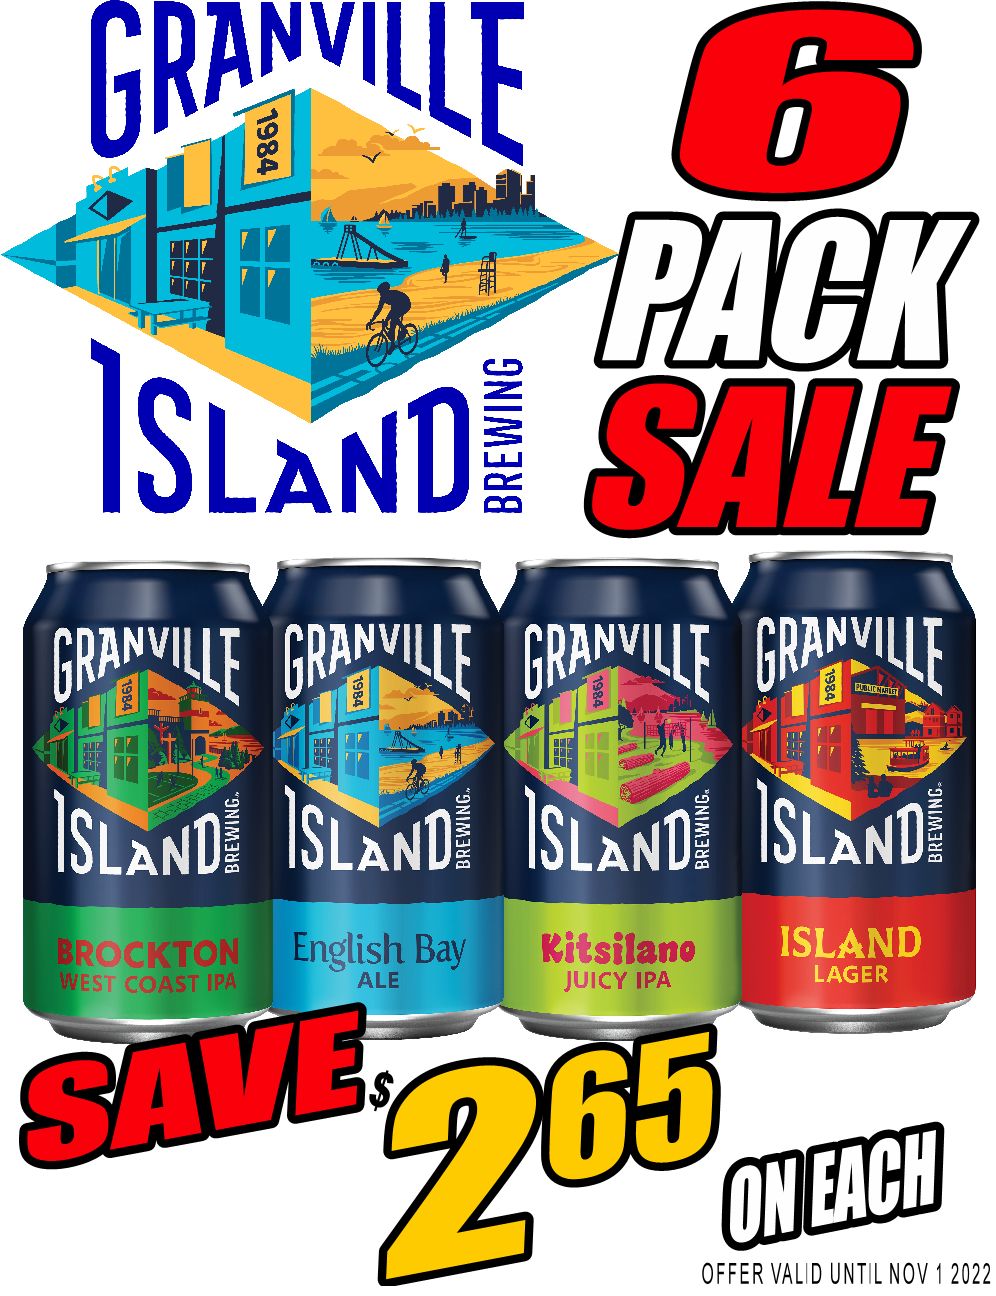 Granville Island Brewing - WCIPA/Pale Ale/Lager & Juicy IPA - 6x355ml - Save $2.65/EA